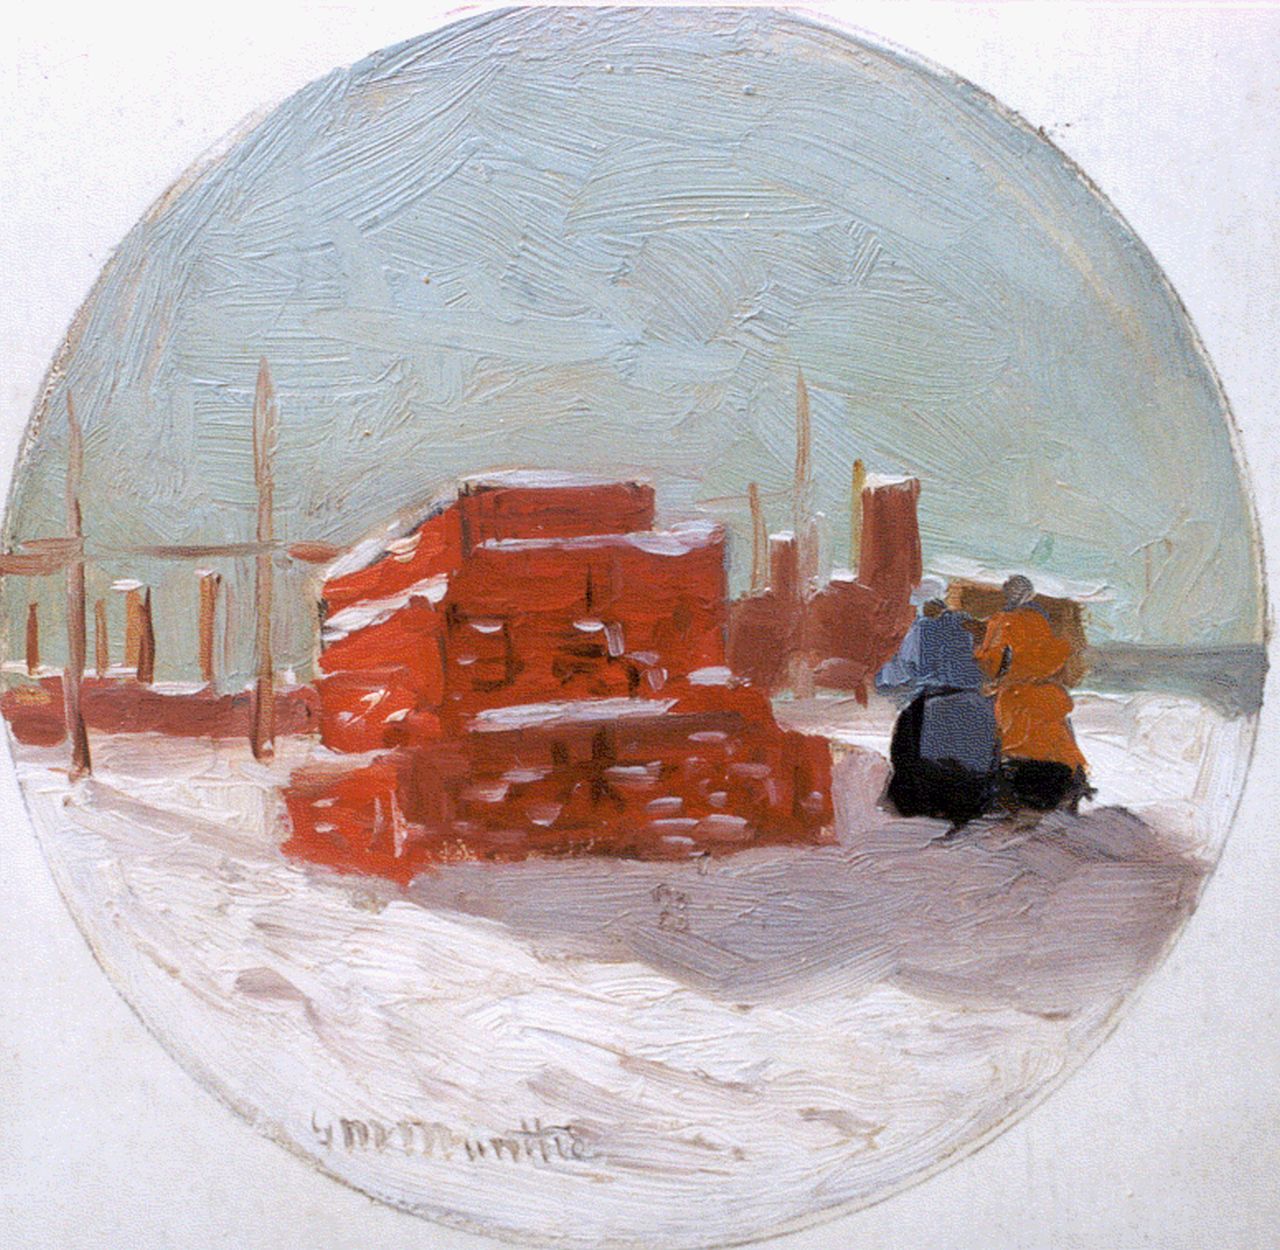 Munthe G.A.L.  | Gerhard Arij Ludwig 'Morgenstjerne' Munthe, Strand in de winter, 16,9 x 16,0 cm, gesigneerd linksonder